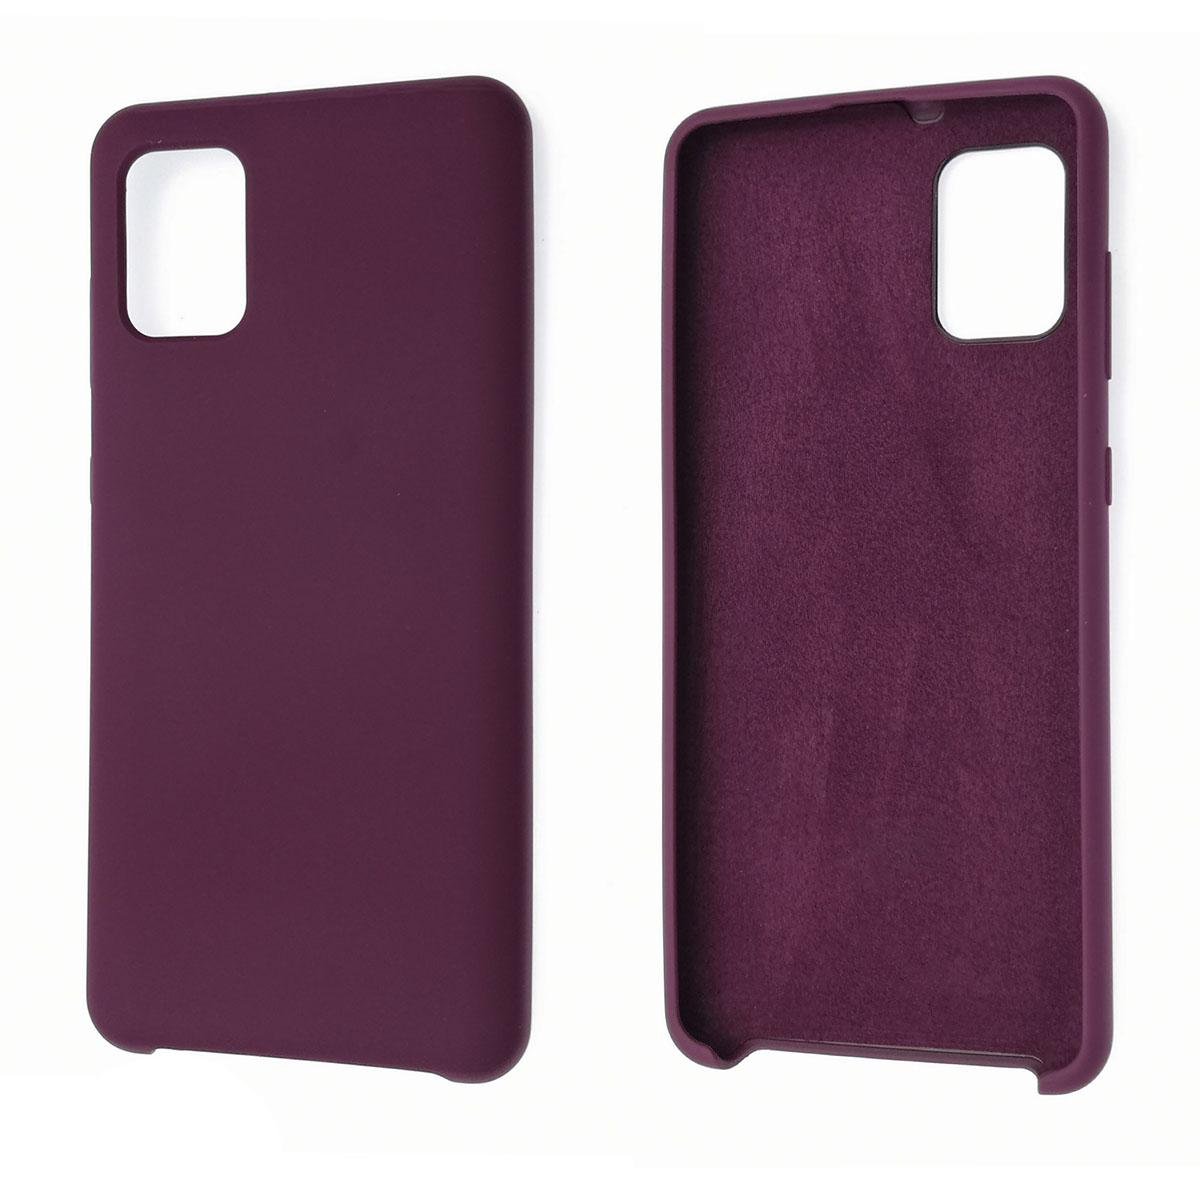 Чехол накладка Silicon Cover для SAMSUNG Galaxy A31 (SM-A315), силикон, бархат, цвет баклажан.